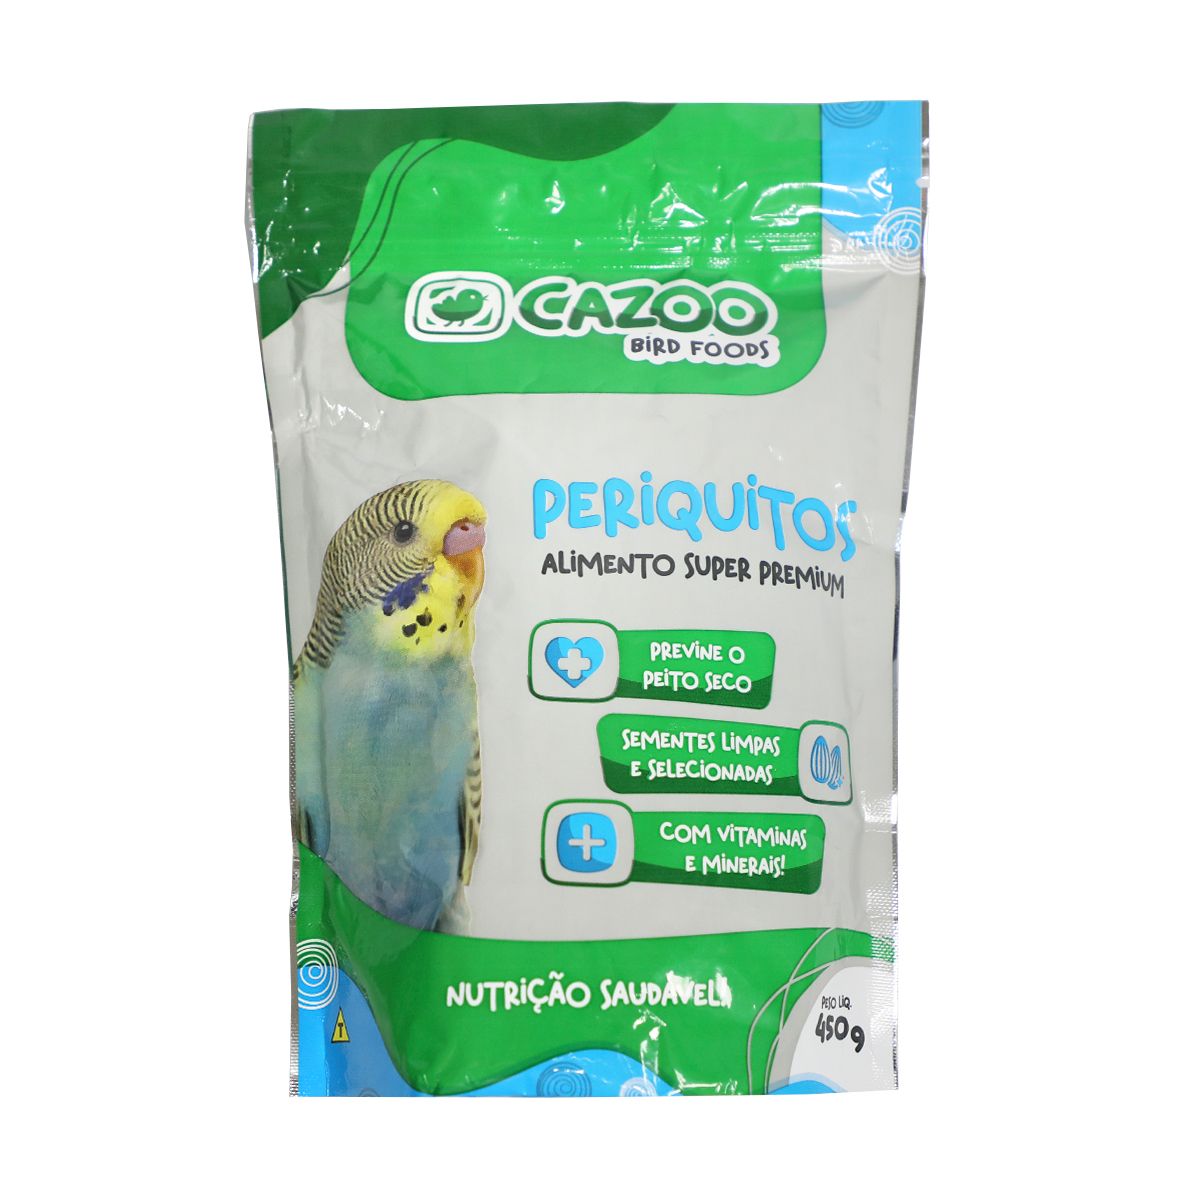 Alimento para Aves Cazoo Premium Periquitos 450g